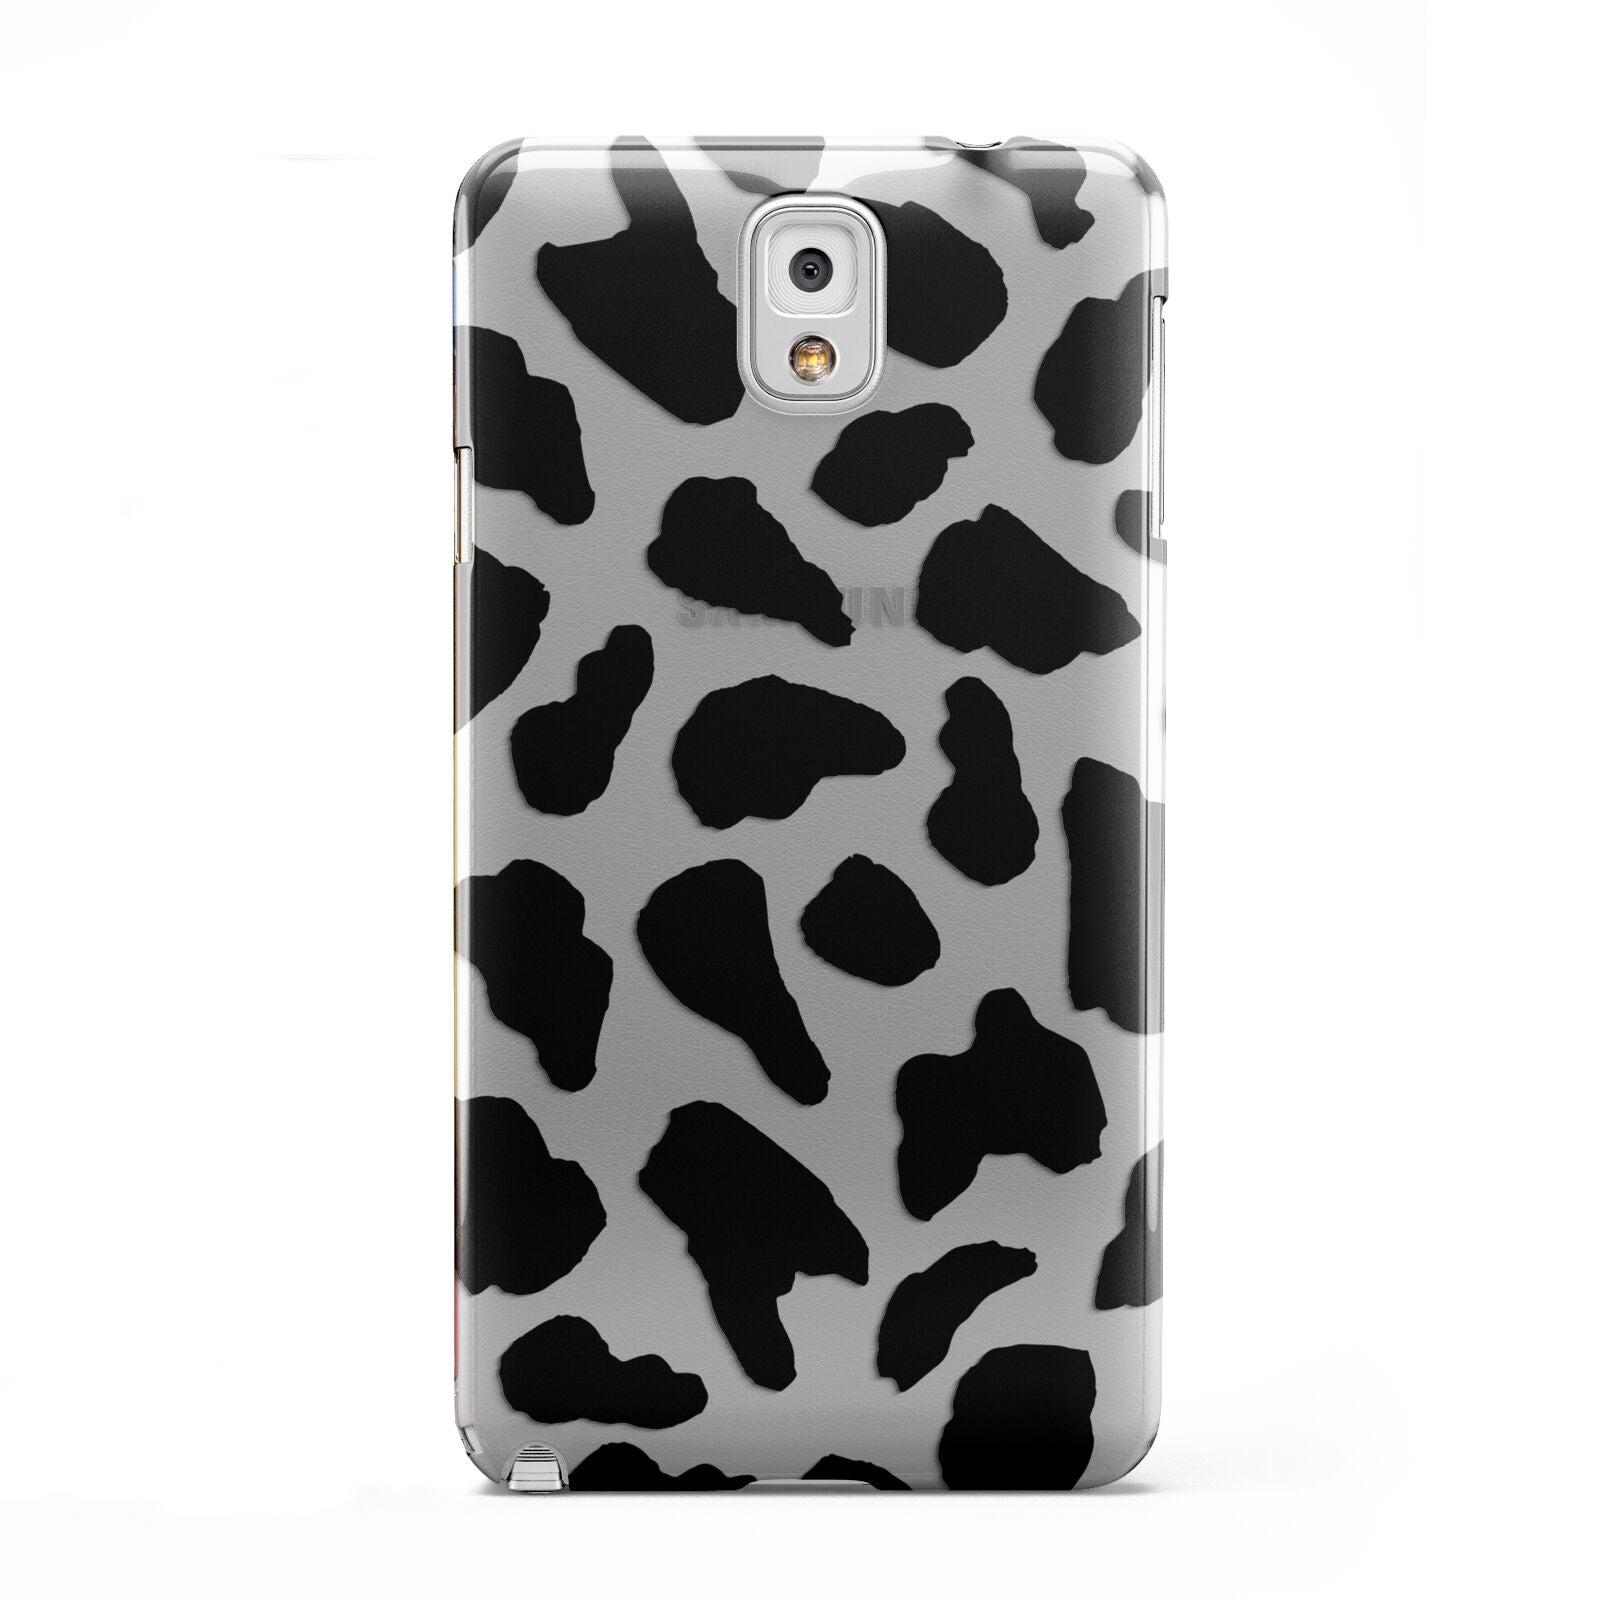 Black Cow Print Samsung Galaxy Note 3 Case